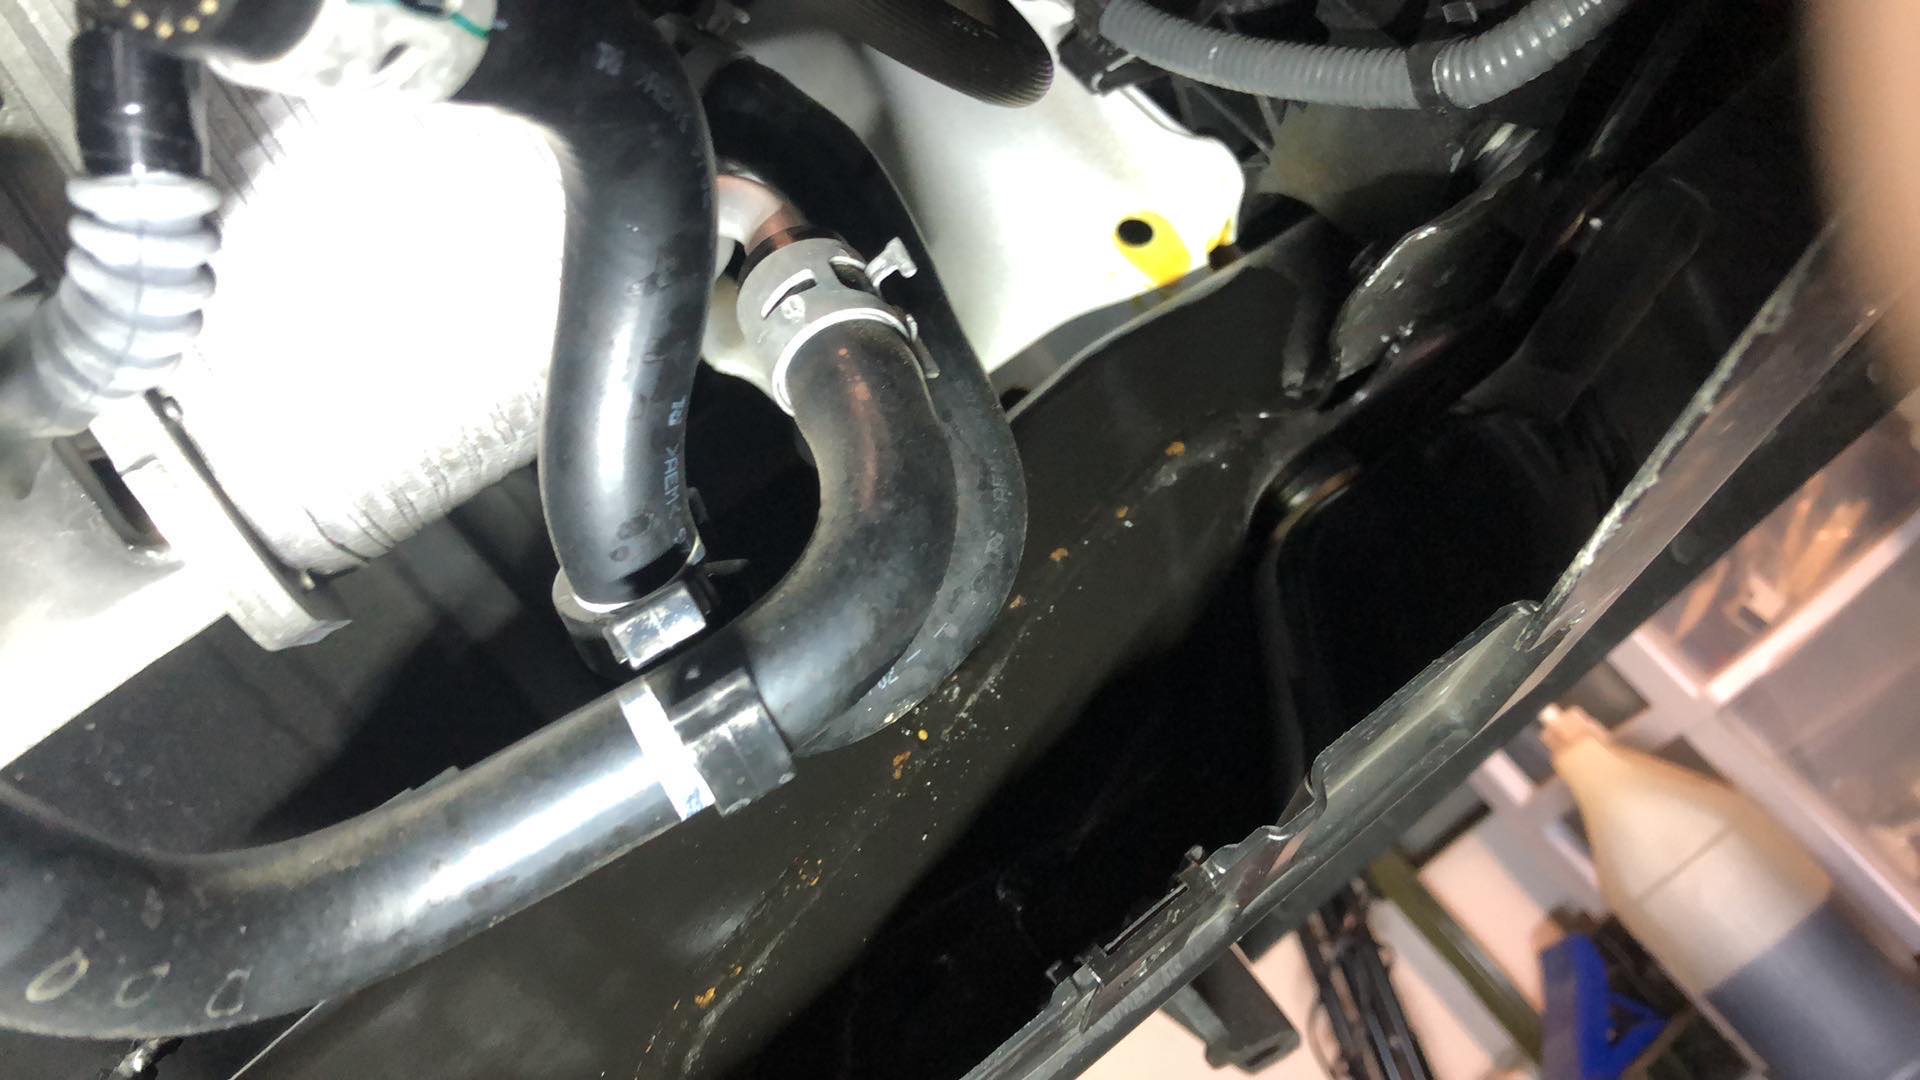 Honda Civic 10th gen Small rust spots on subframe 45C7073B-E75C-4FFC-B161-8C3F0E36BC40